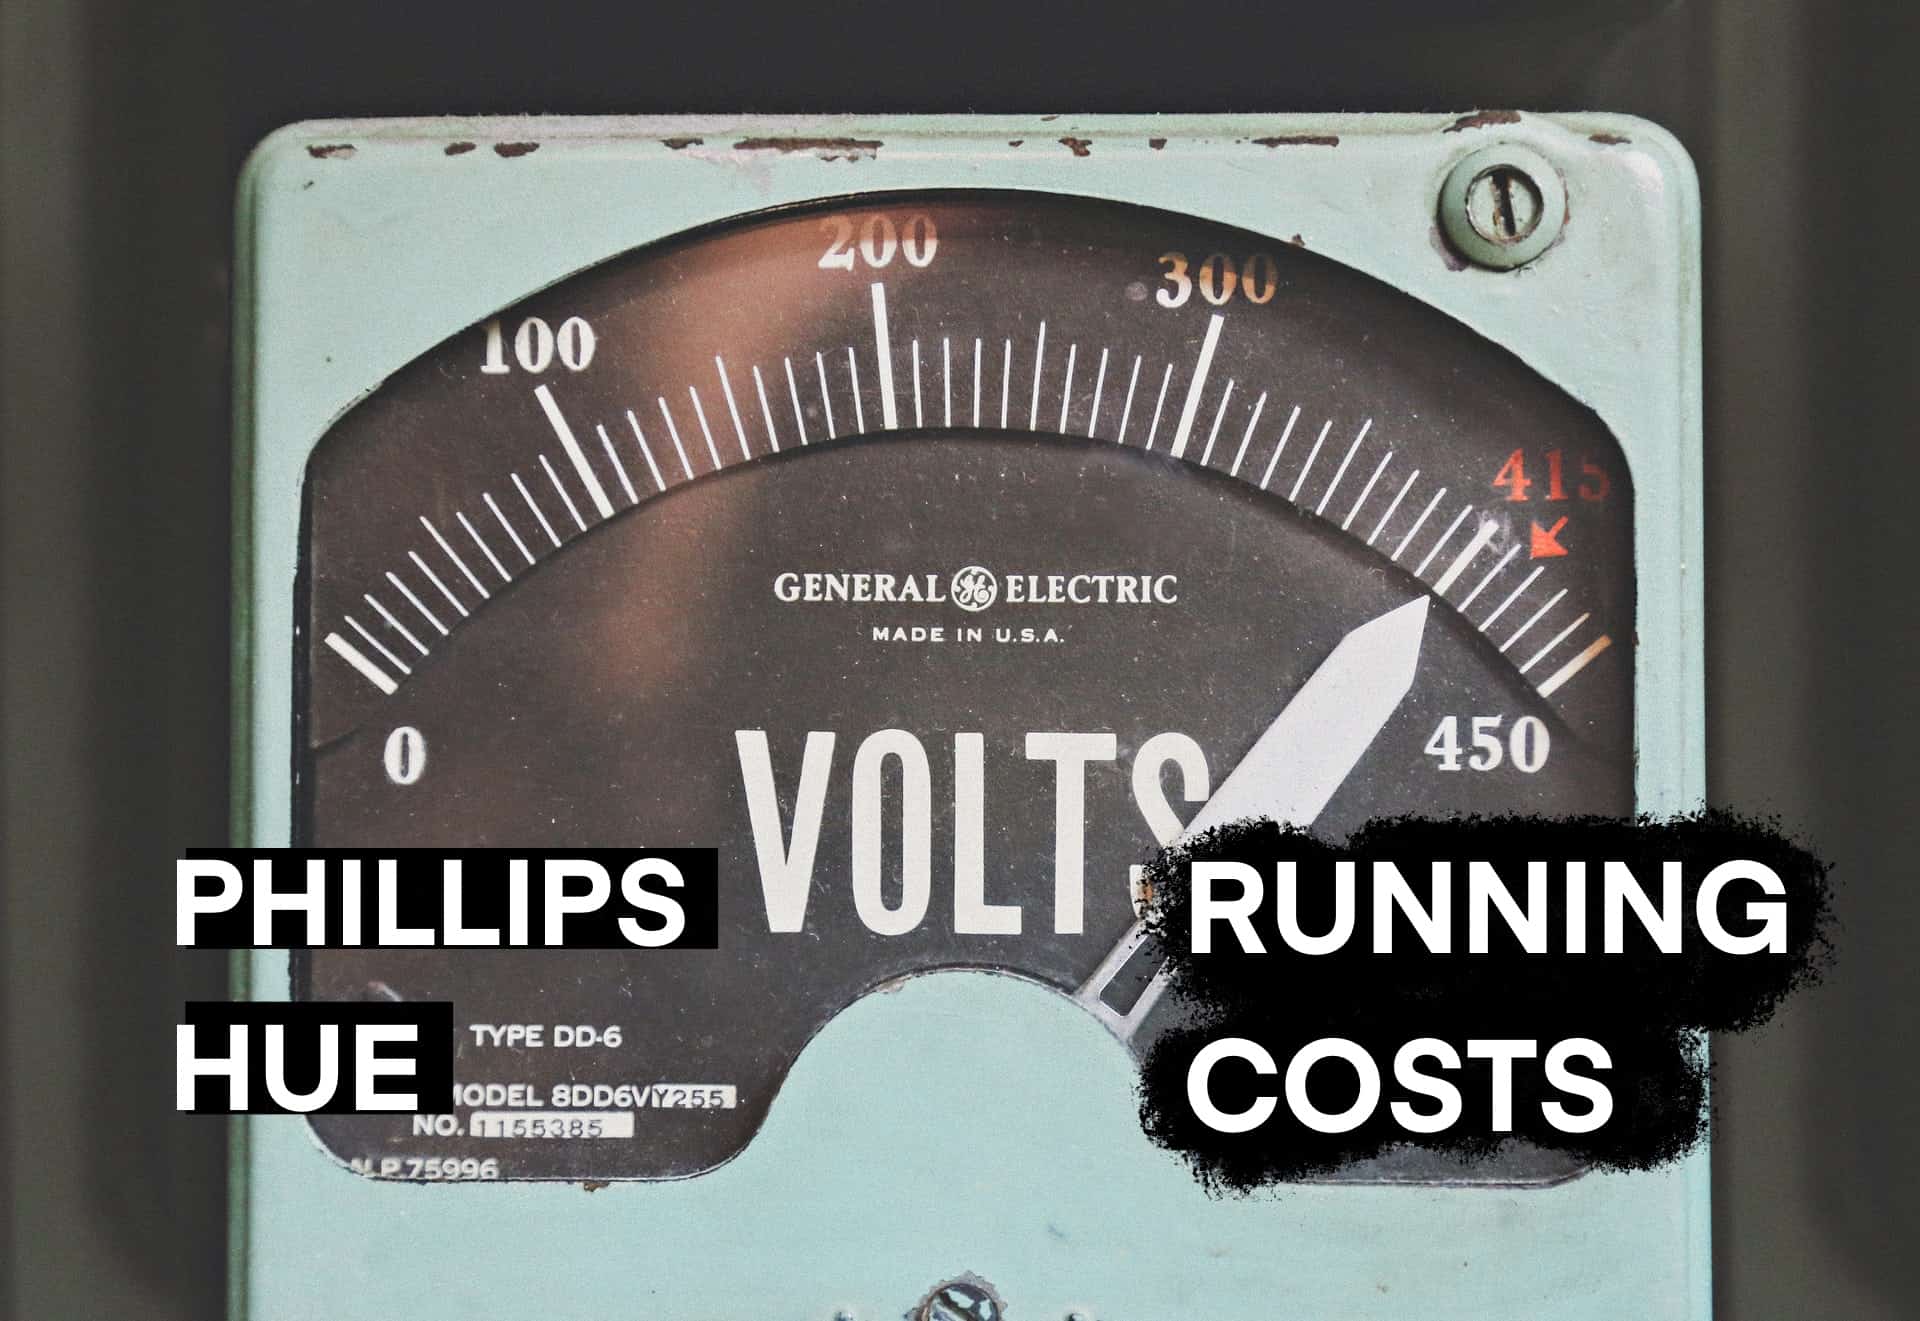 Phillips hue running costs